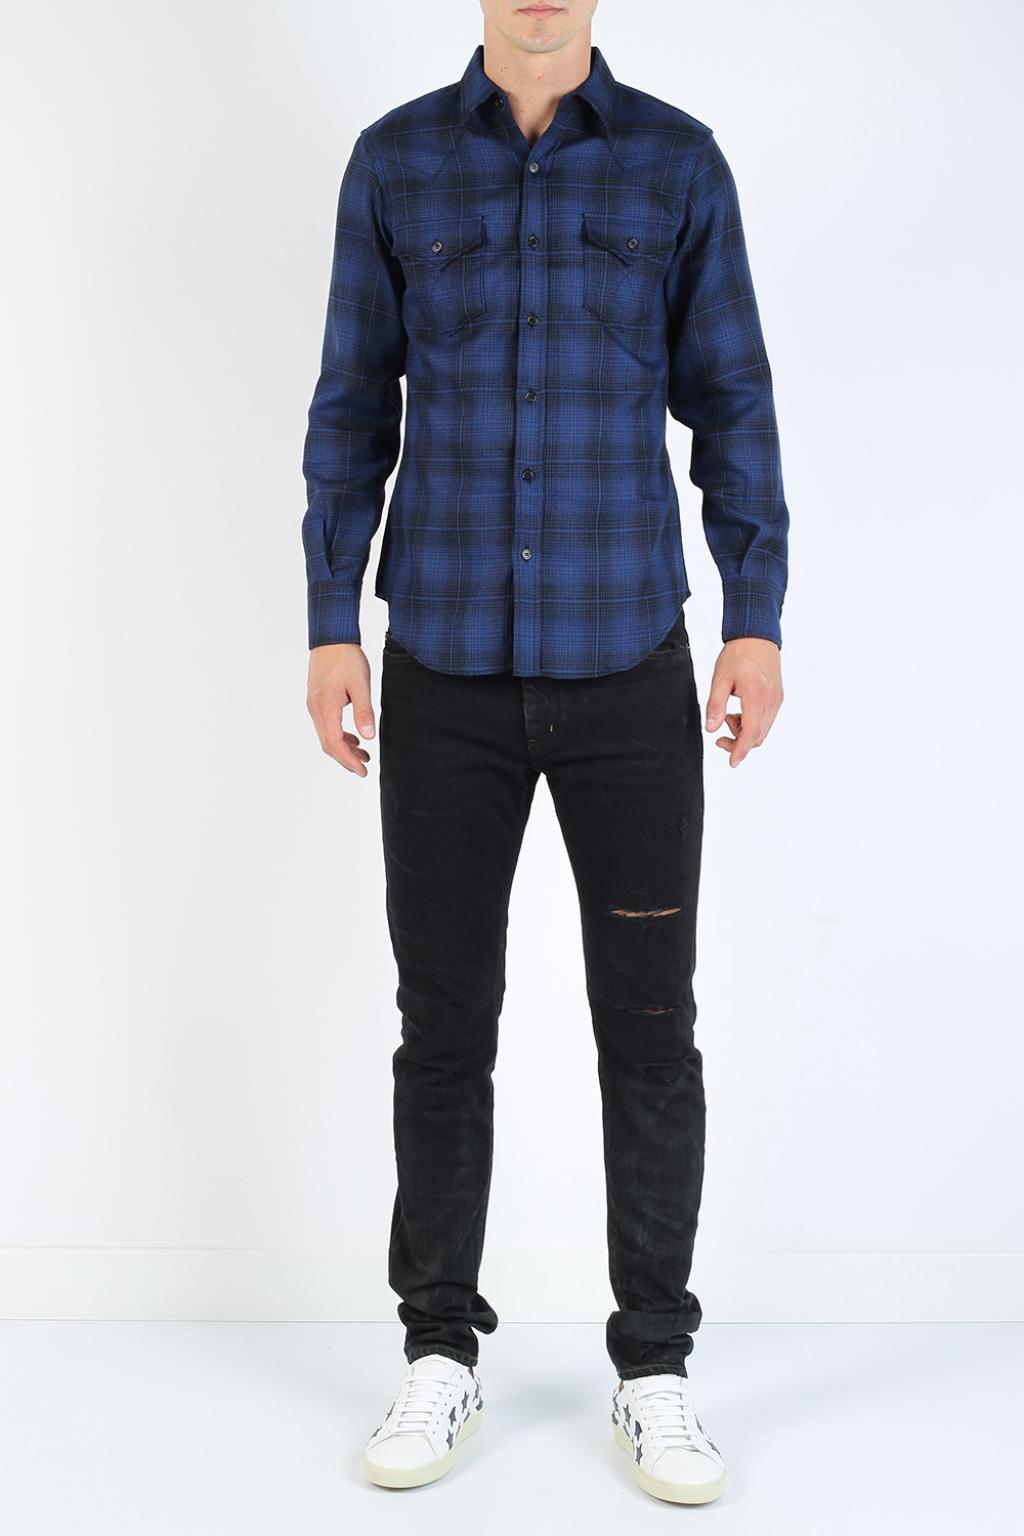 Saint Laurent Checked wool shirt | Men's Clothing | Vitkac